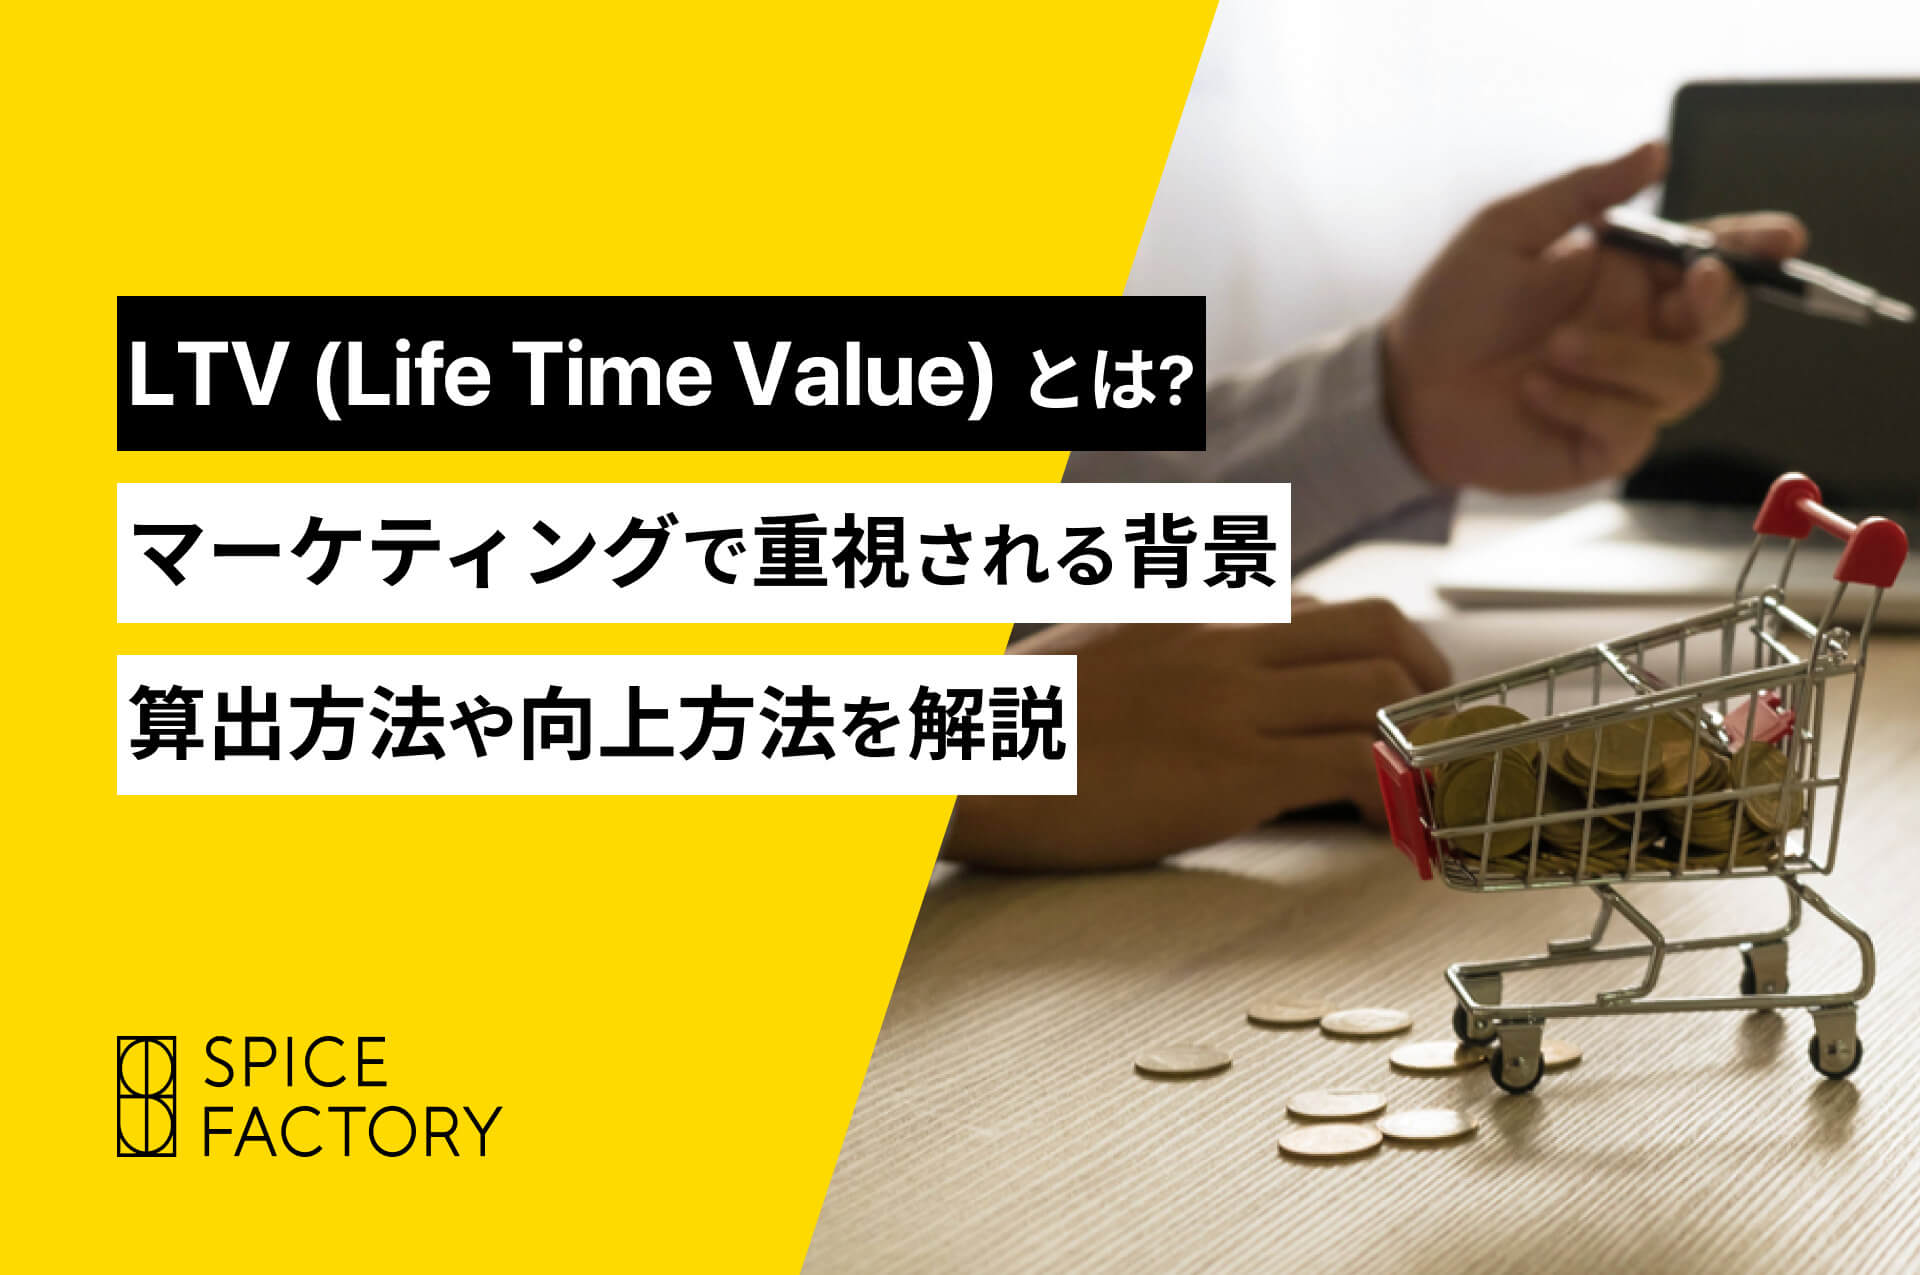 LTV（Life Time Value）とは？マーケティングで重視される背景、算出方法や向上方法を解説